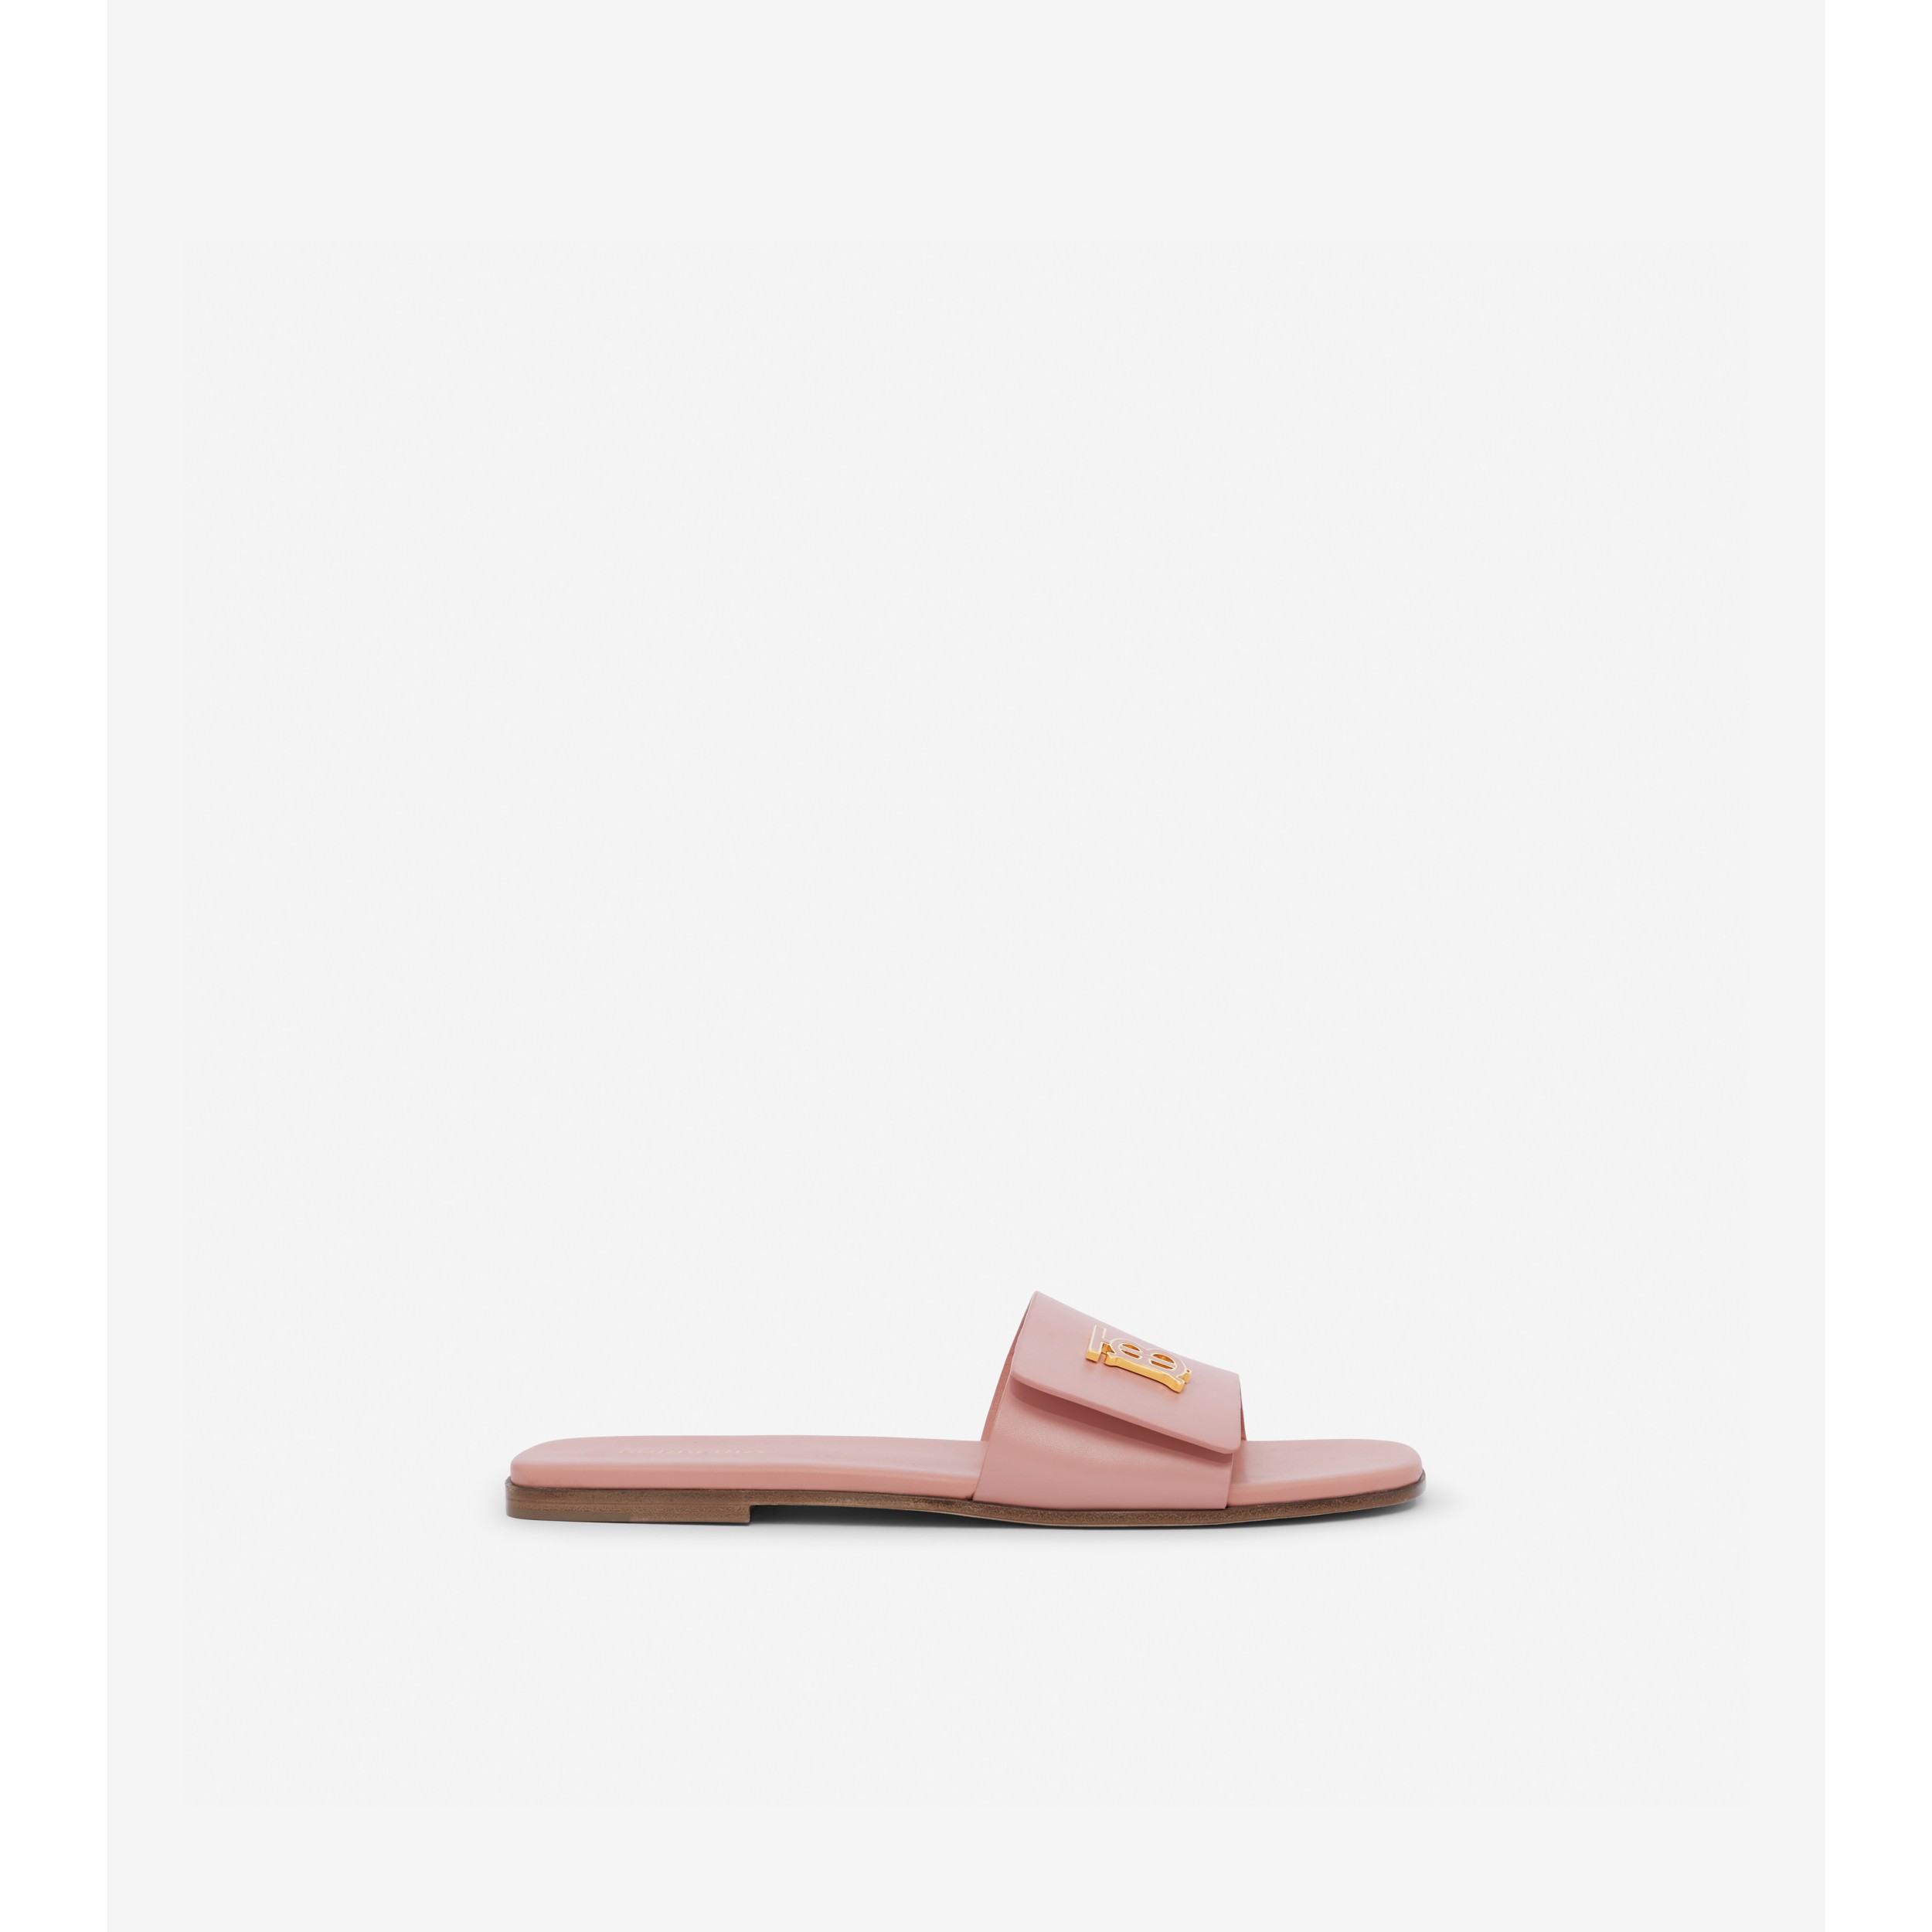 Louis Vuitton Slides/Flip-Flops - Supplier For Designer